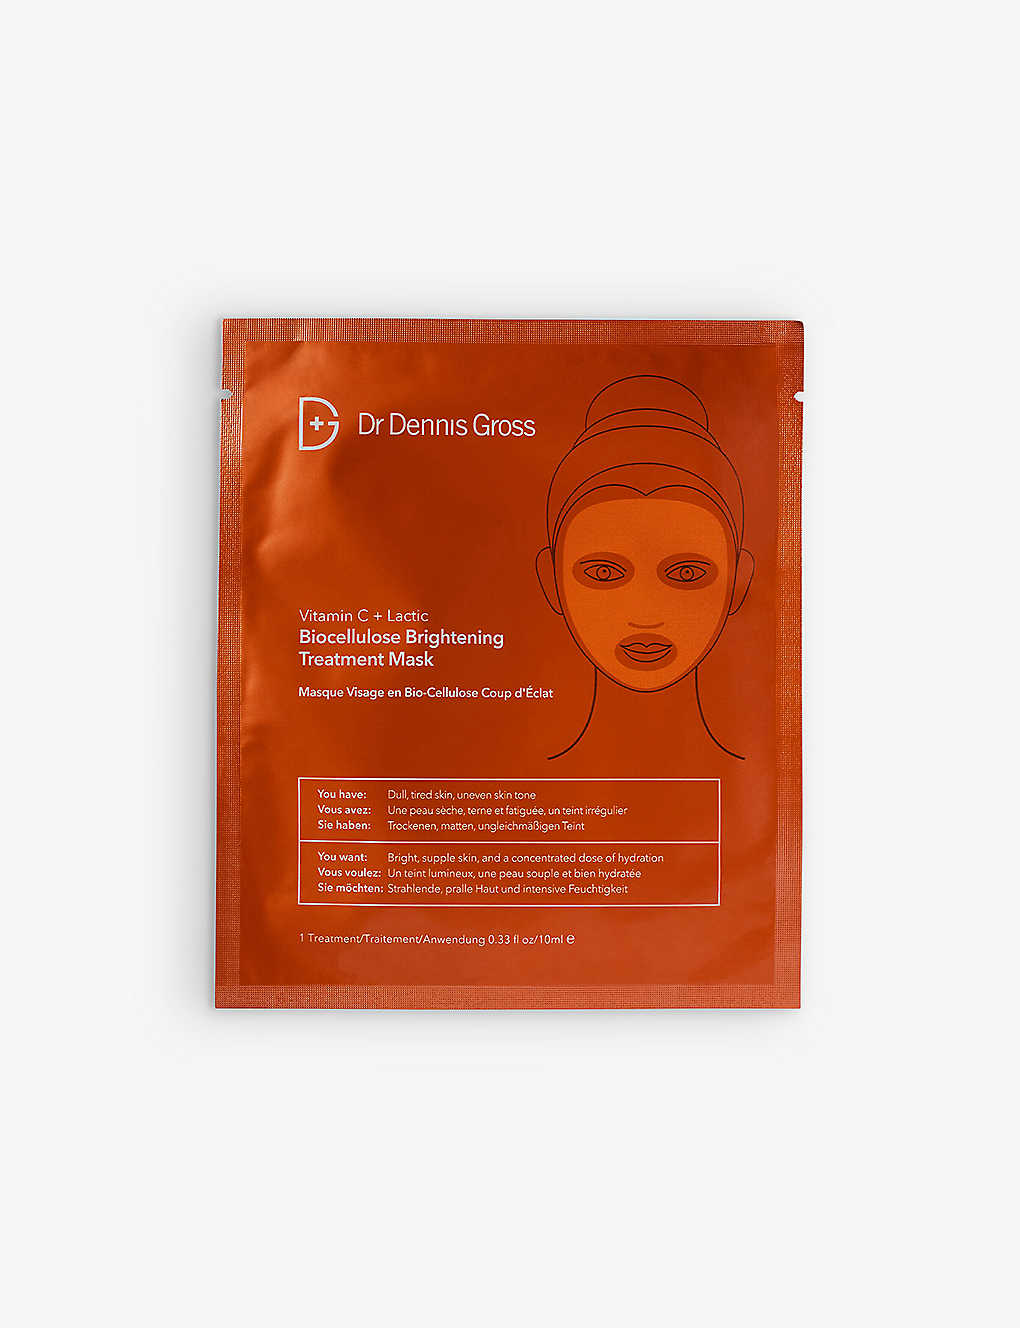 Dr Dennis Gross Skincare Vitamin C Lactic Biocellulose Brightening Treatment Mask